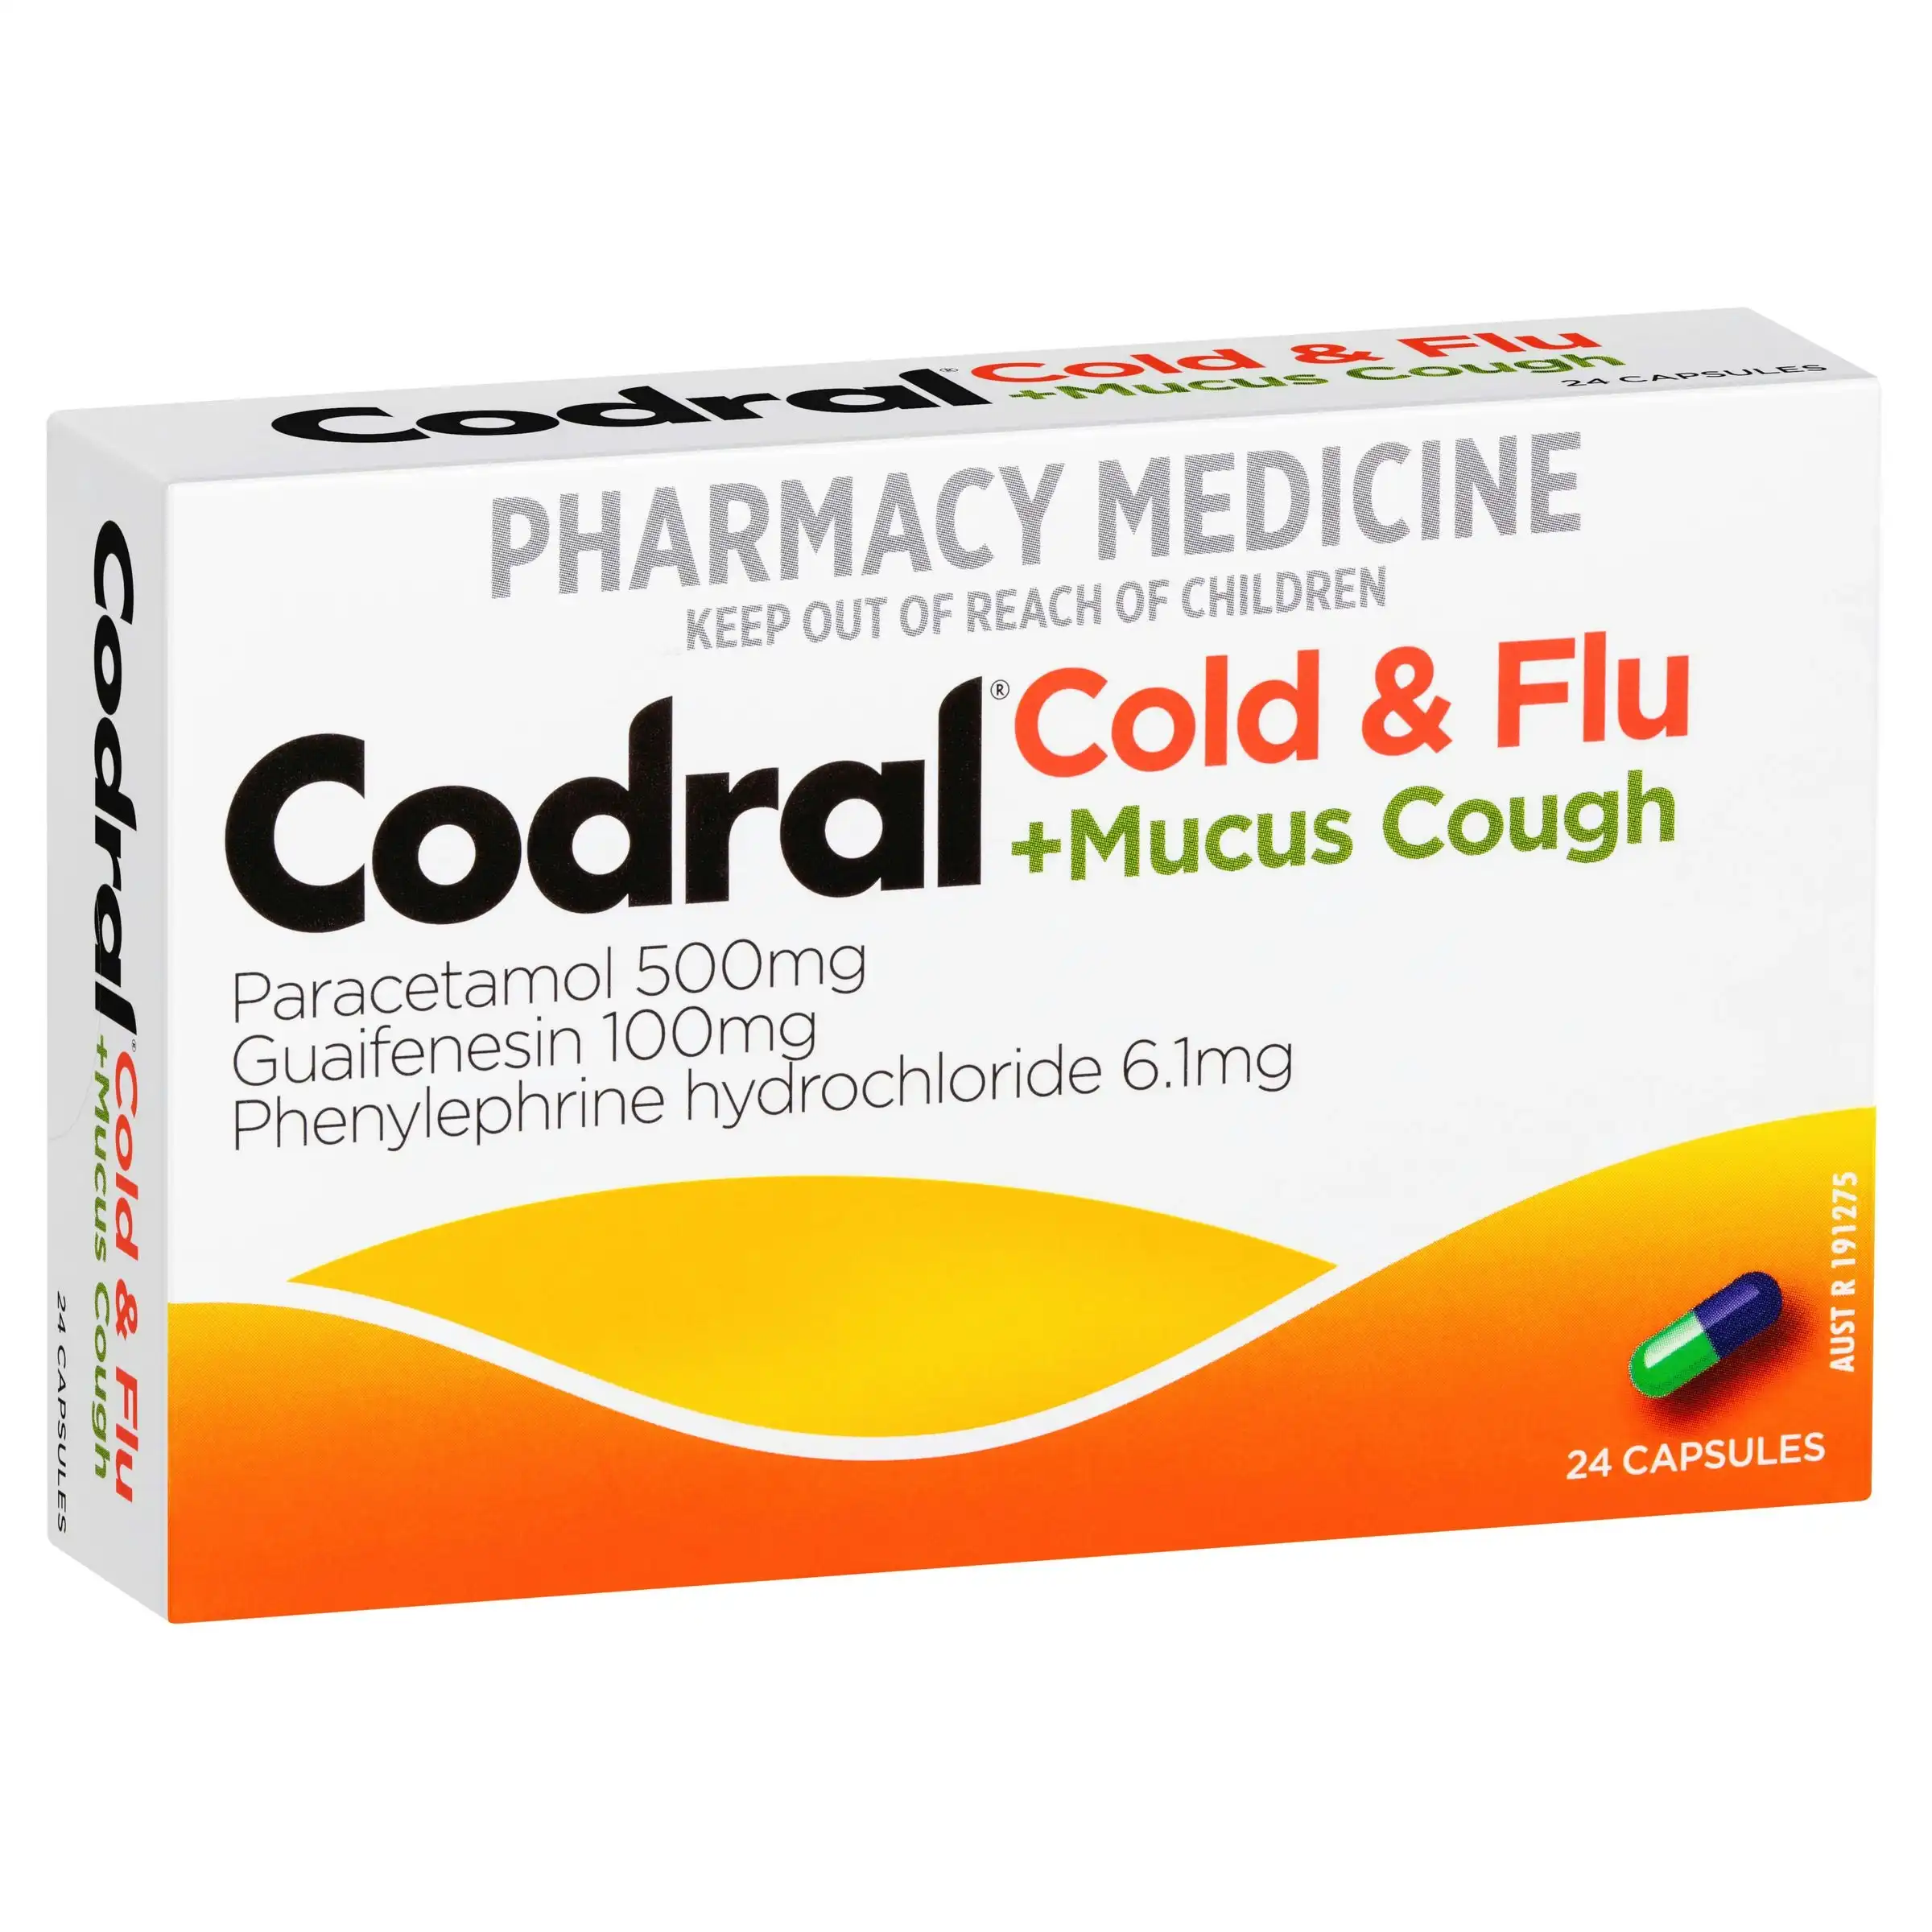 CODRAL Cold & Flu + Mucus Cough 24 Capsules